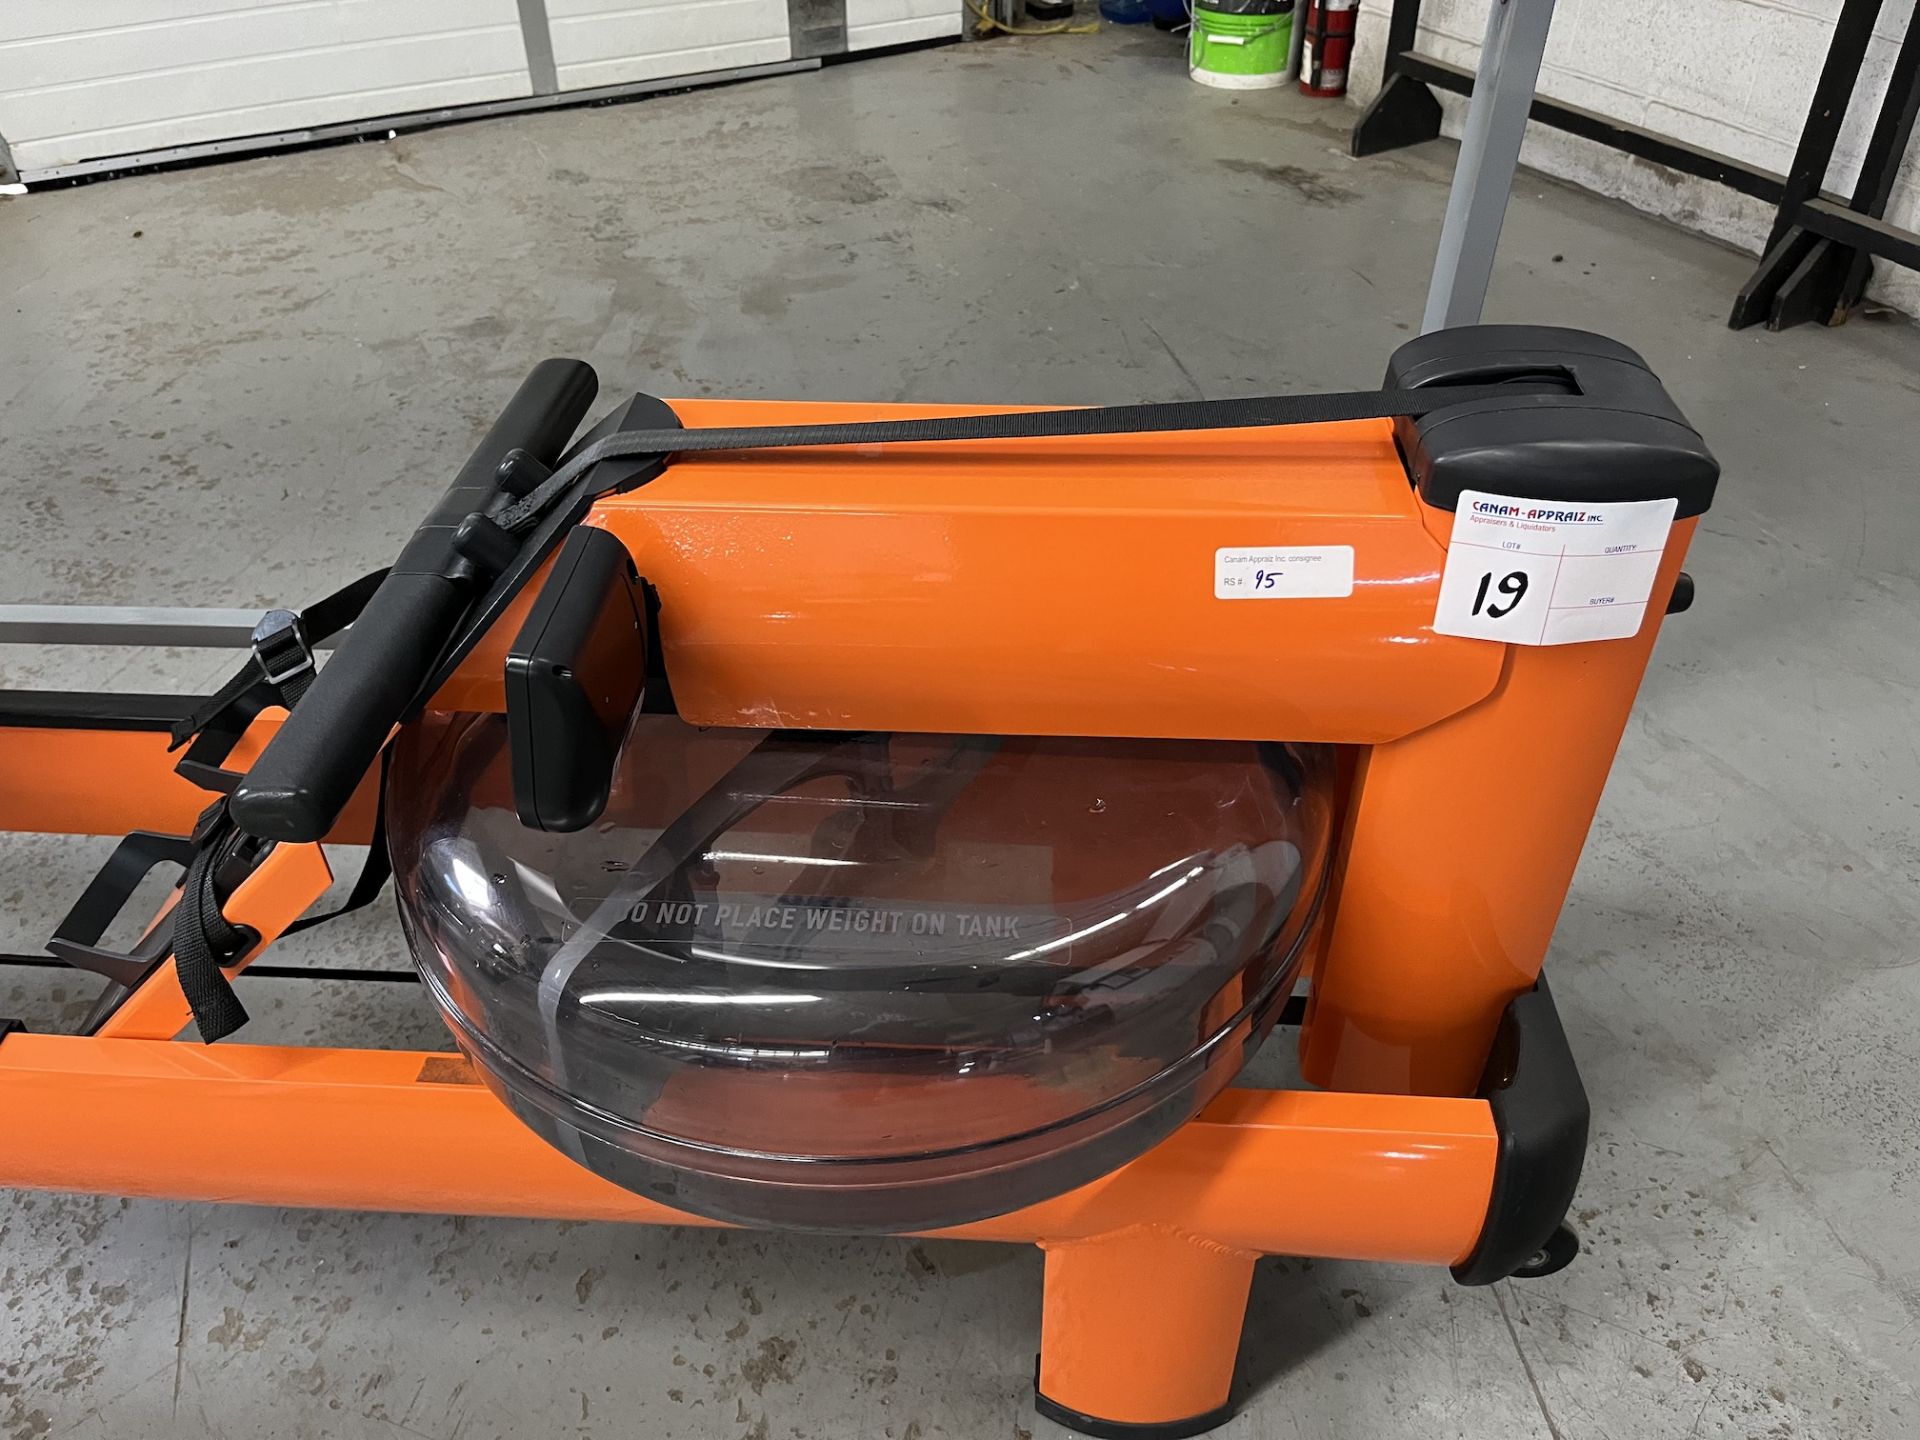 WaterRower - Orange Rowing Exercise Machine - Image 3 of 3